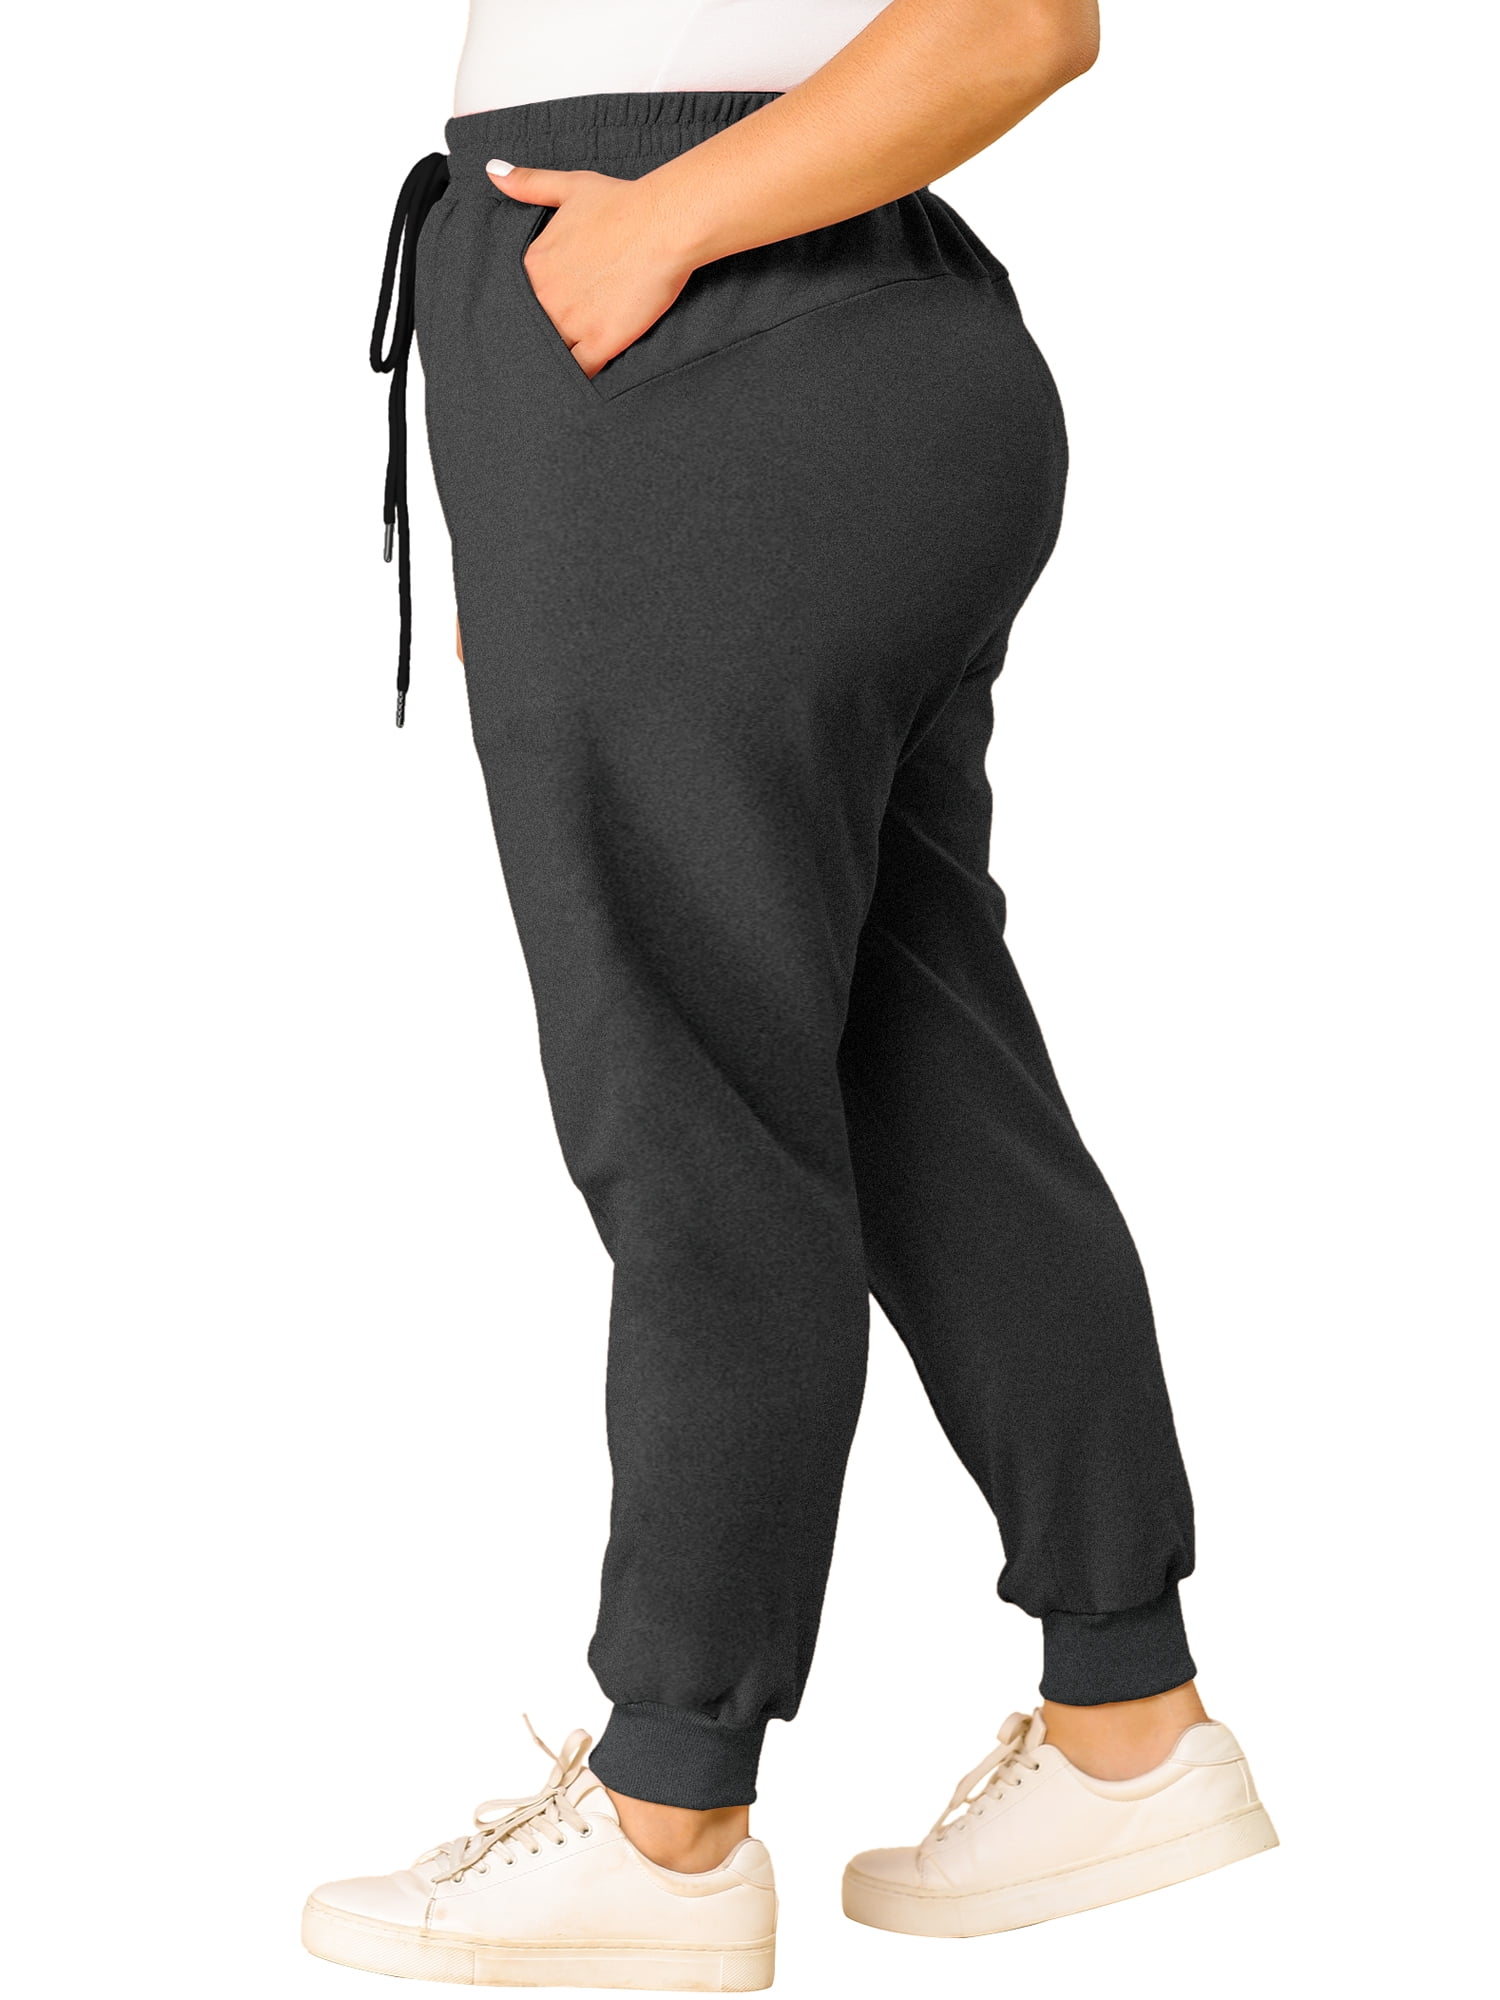 MODA NOVA Juniors' Plus Size Sweatpants Elastic Waist Jogger Pants